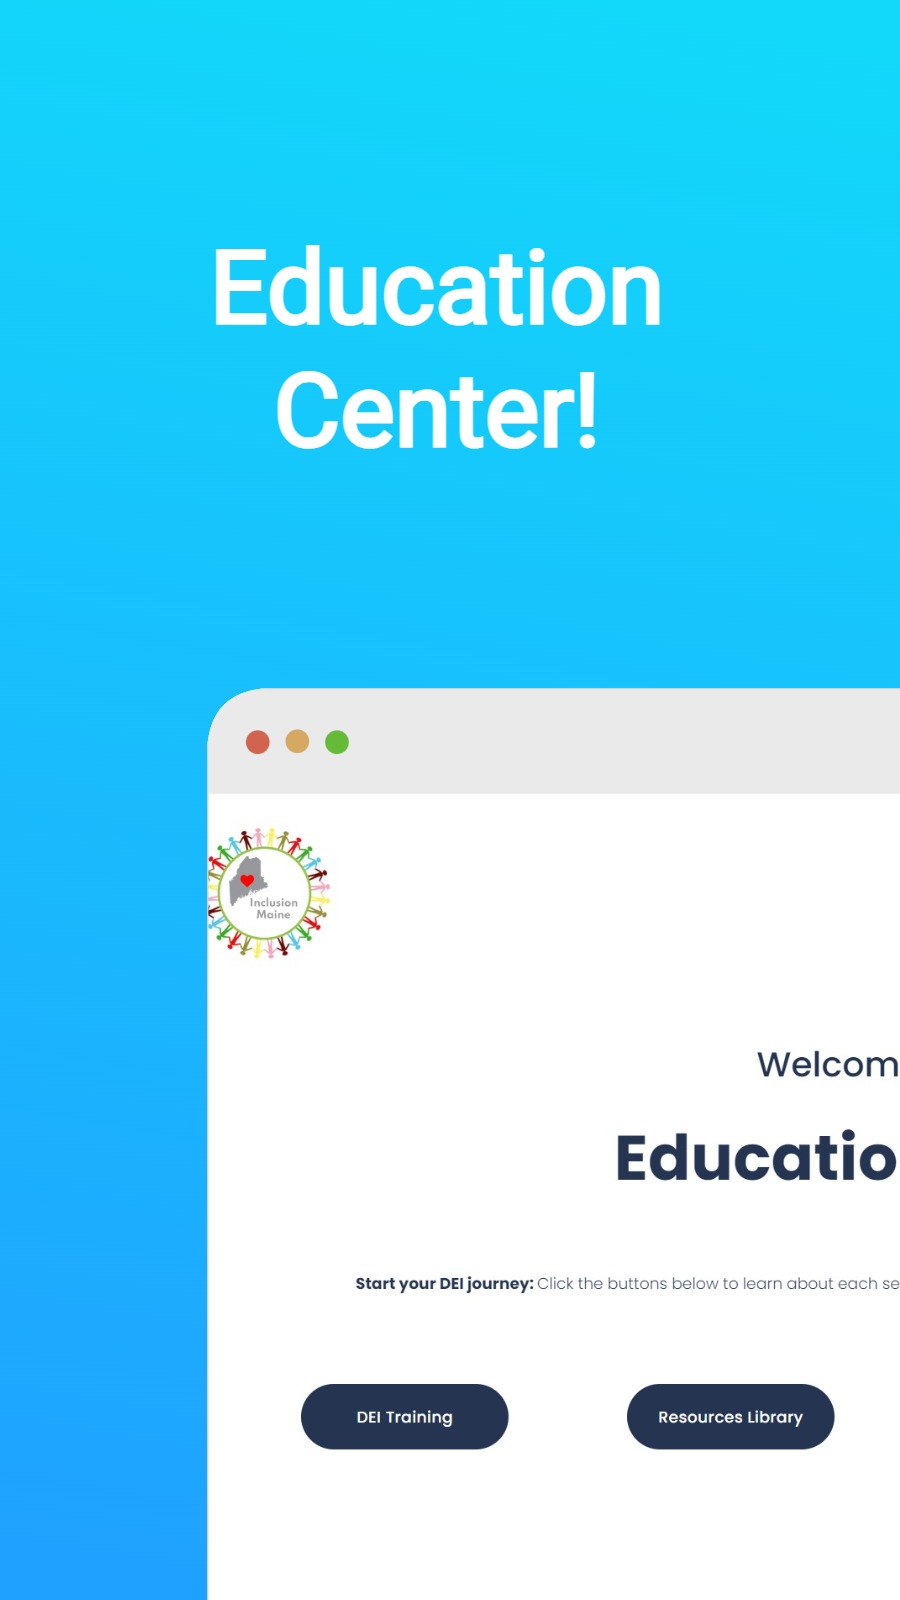 Education Center!